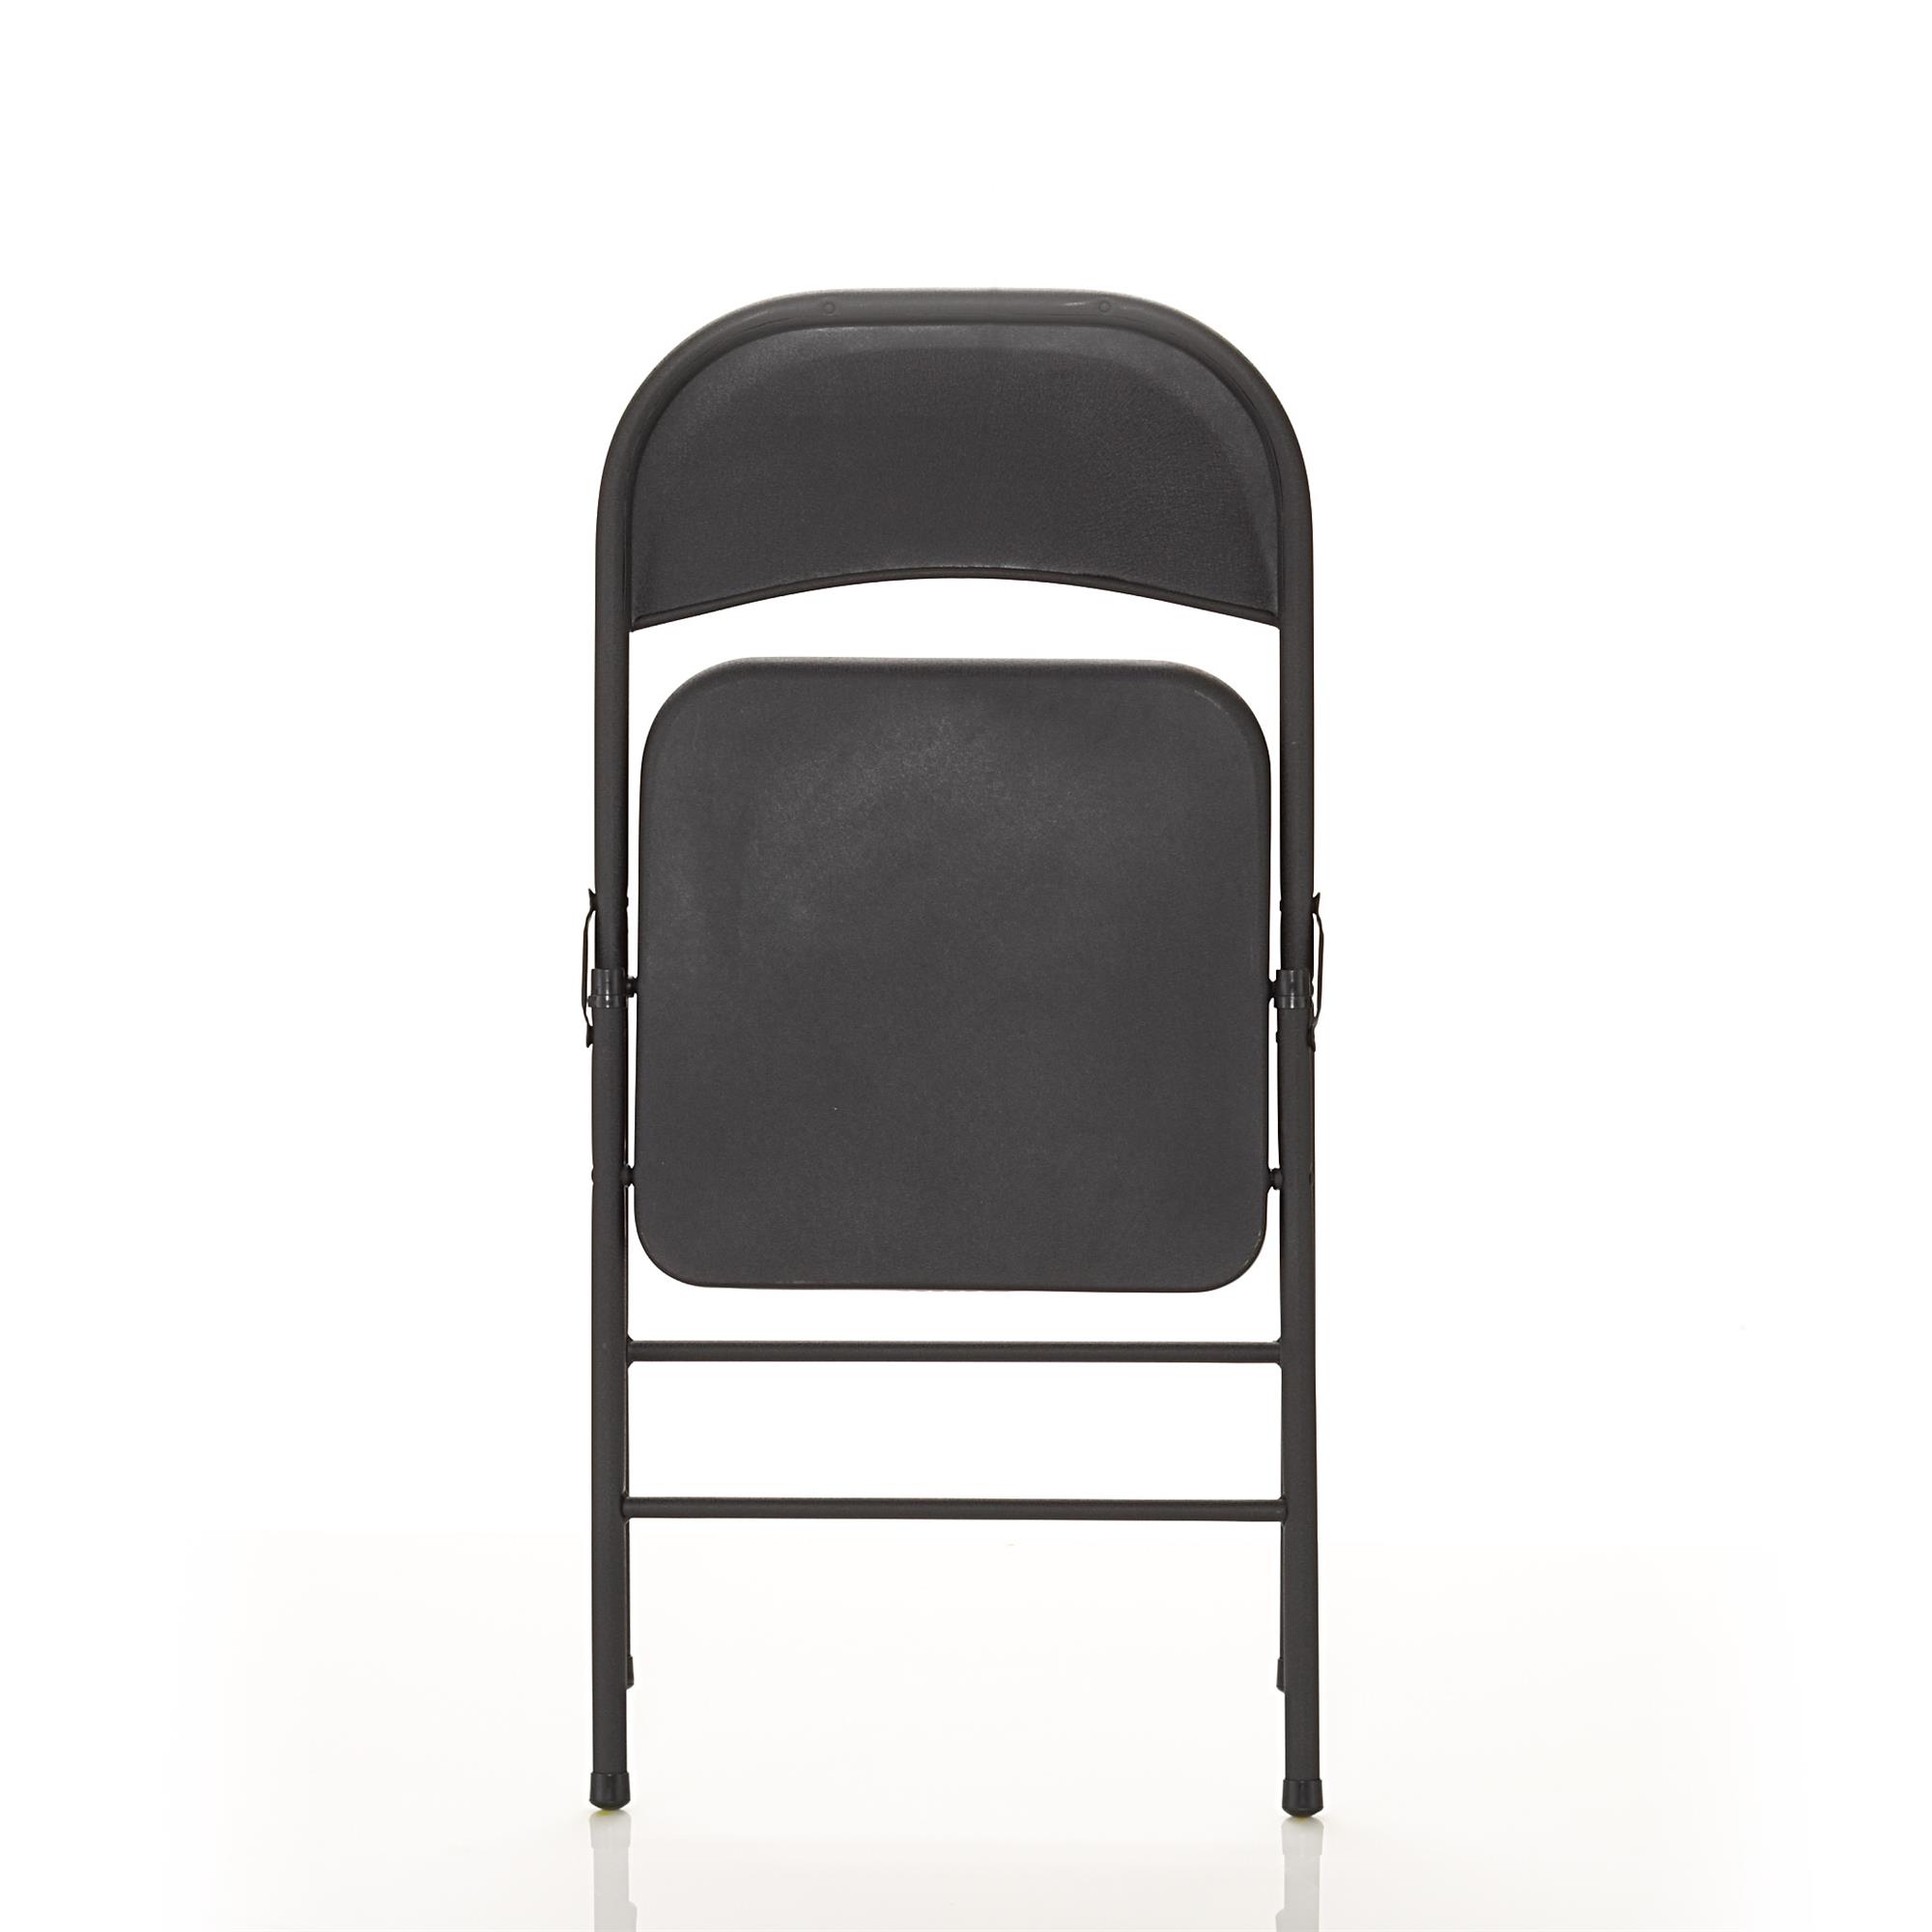 Mainstays Steel Folding Chair (4 Pack), Black - image 3 of 14